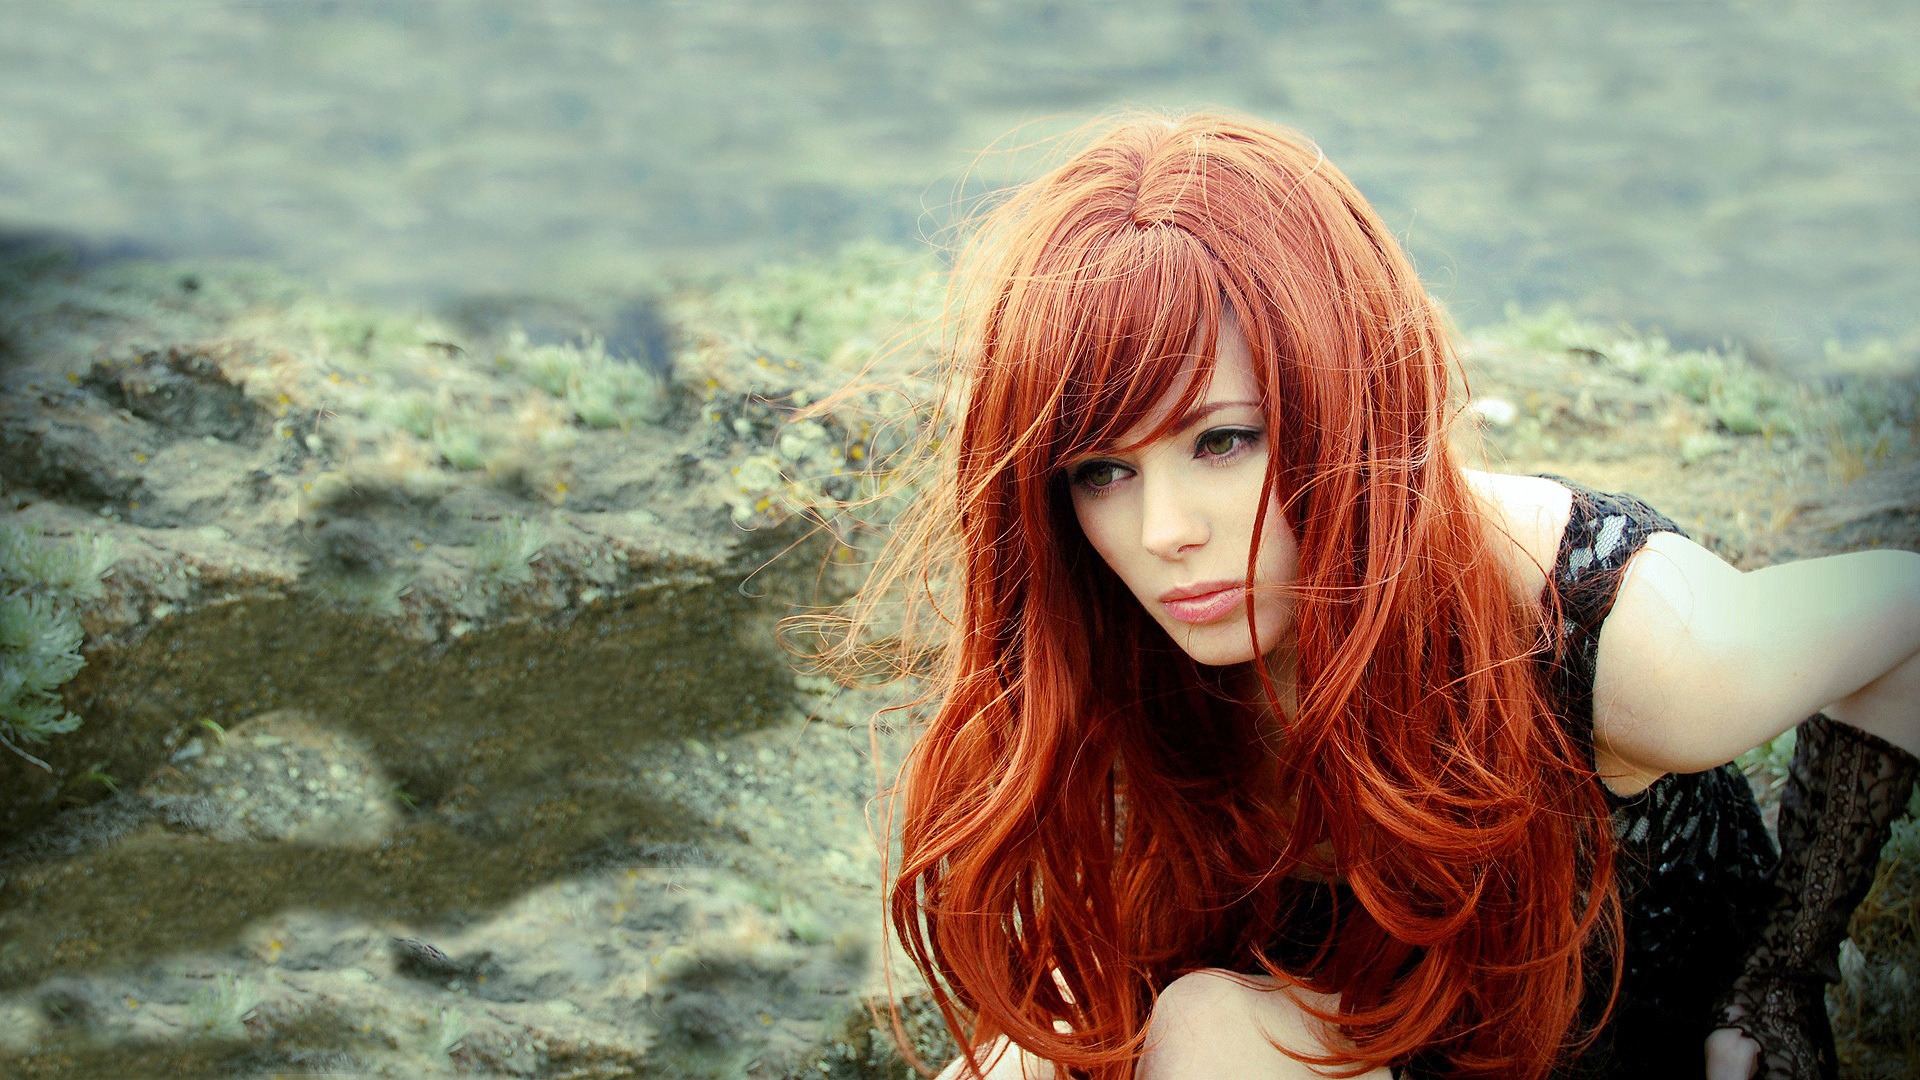 Beautiful Redhead for 1920 x 1080 HDTV 1080p resolution